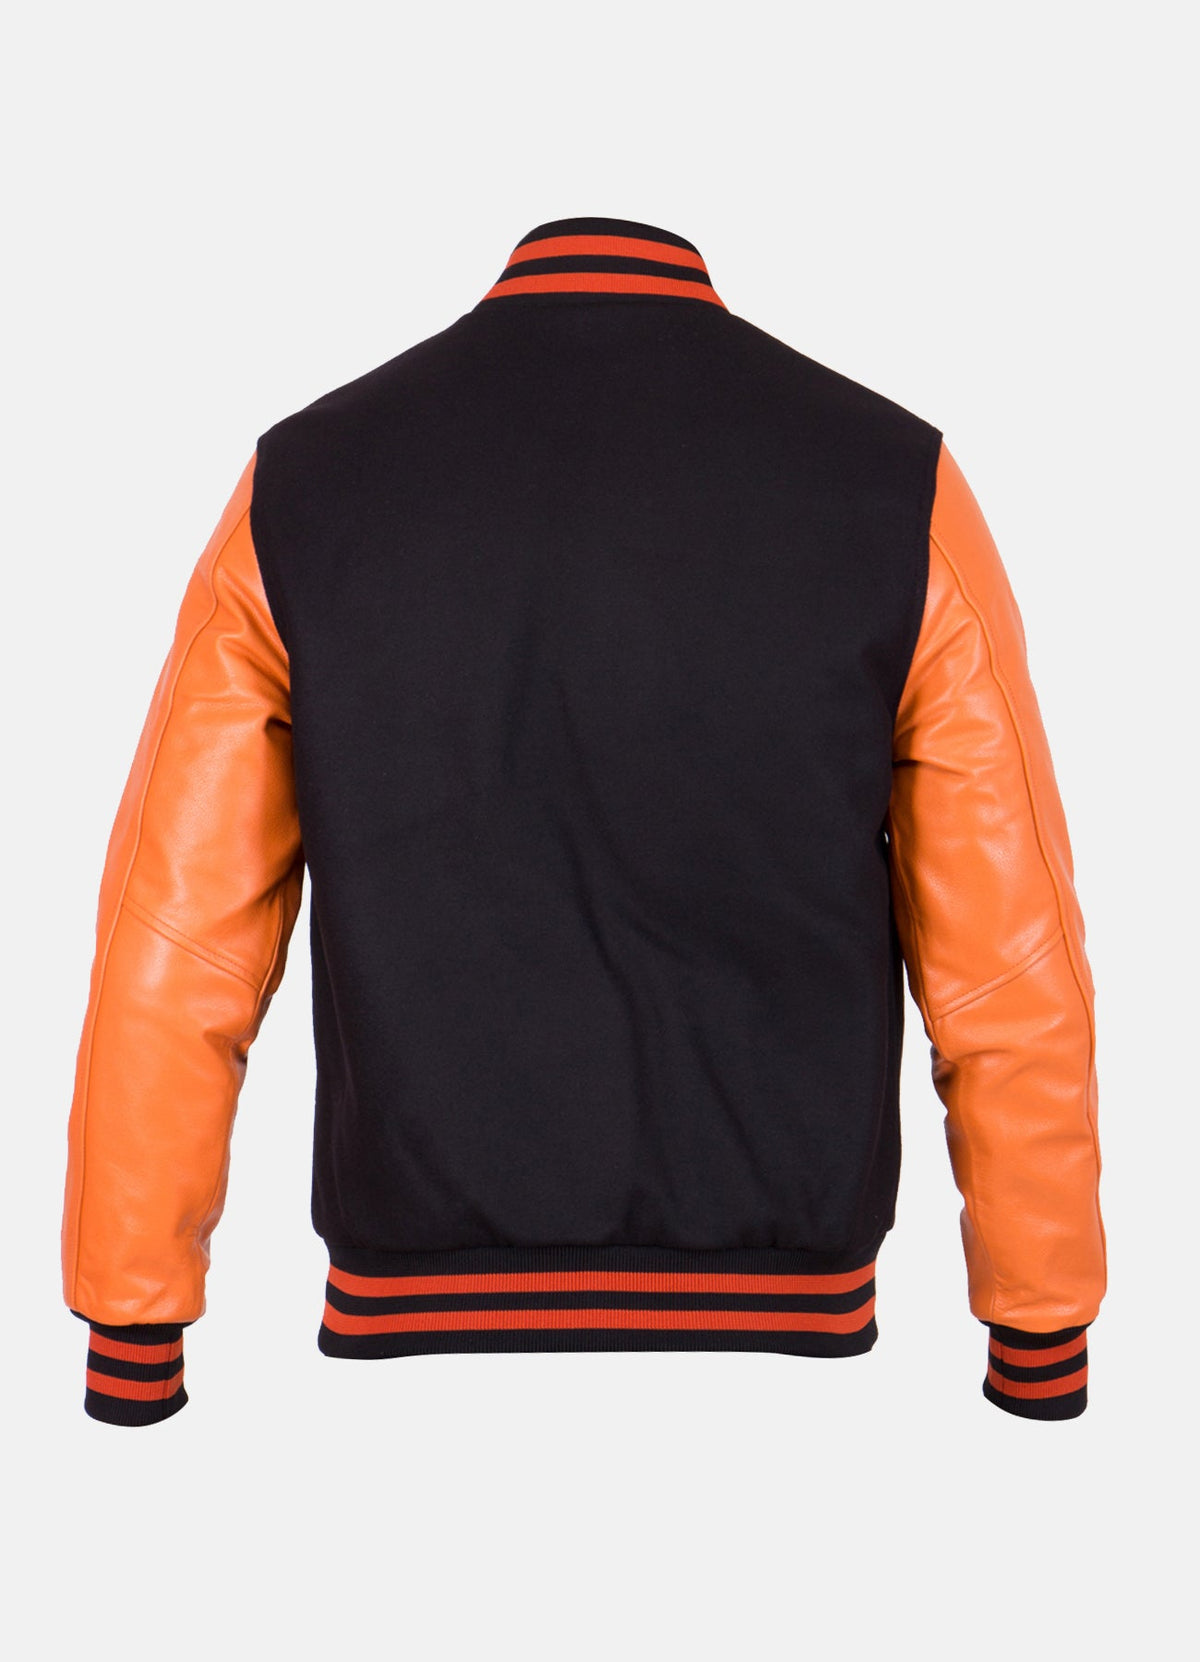 Mens Black and Orange Varsity Jacket